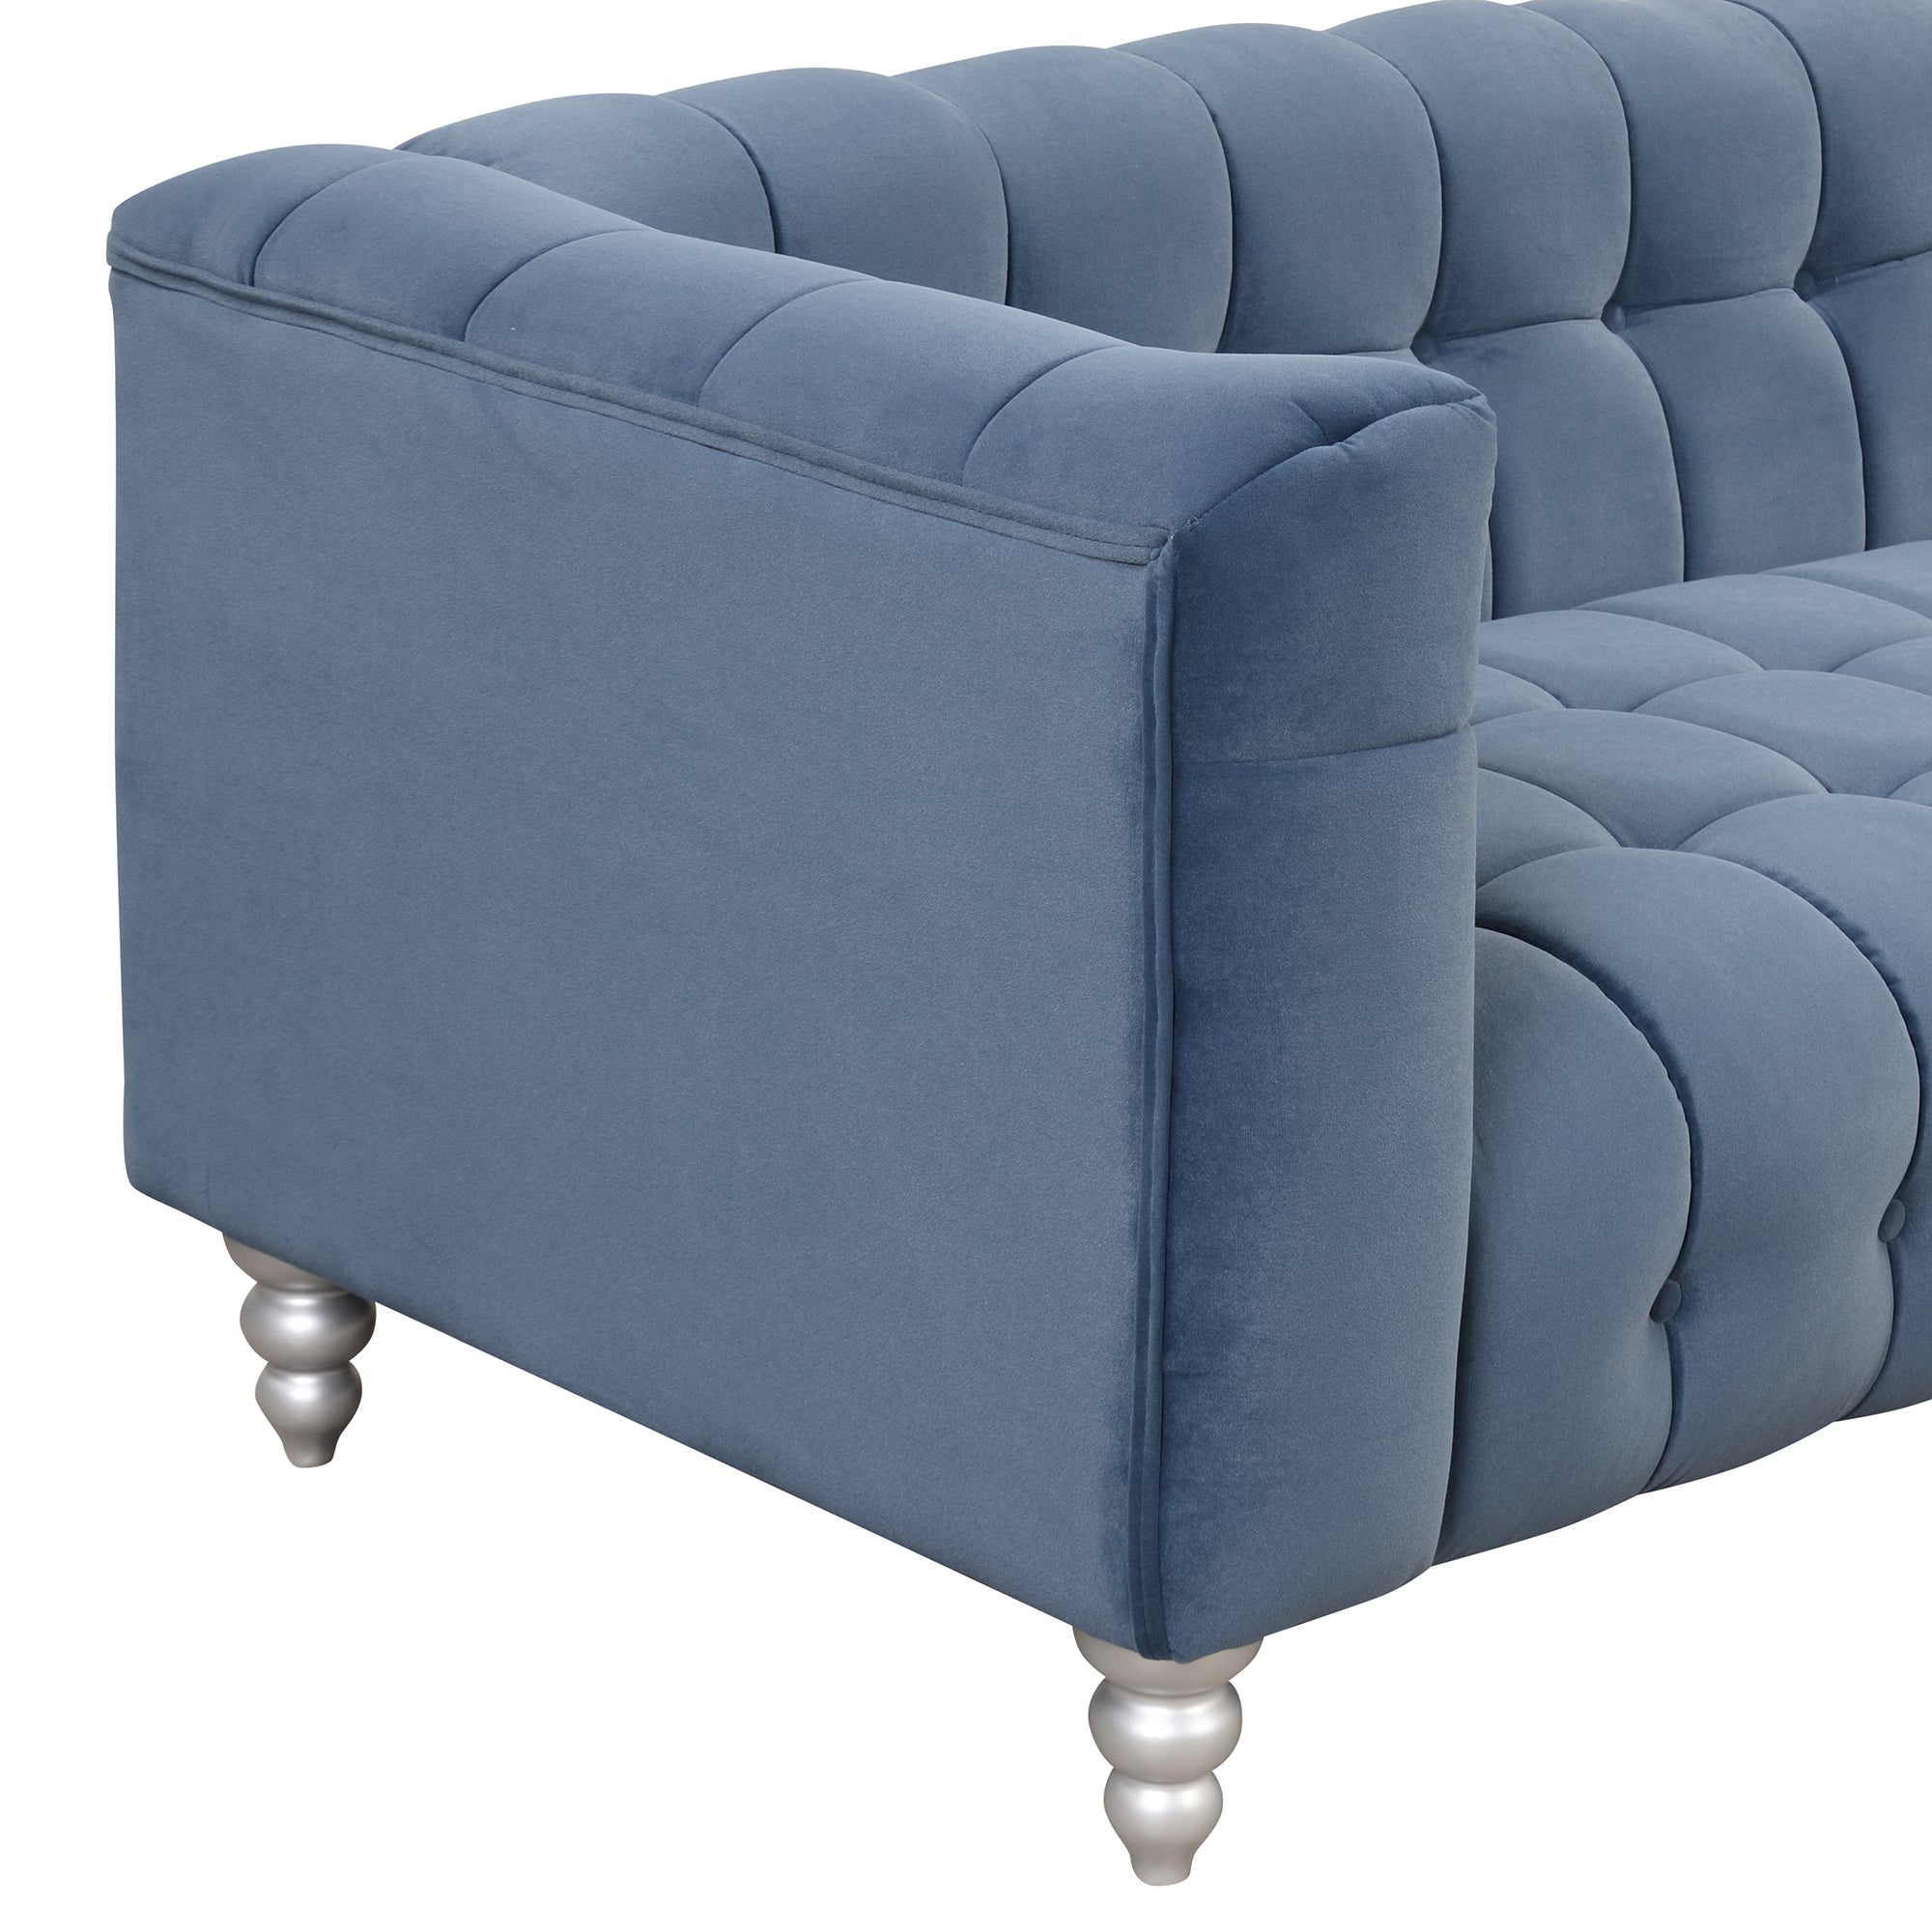 Modern 3-piece Sofa Set - Blue